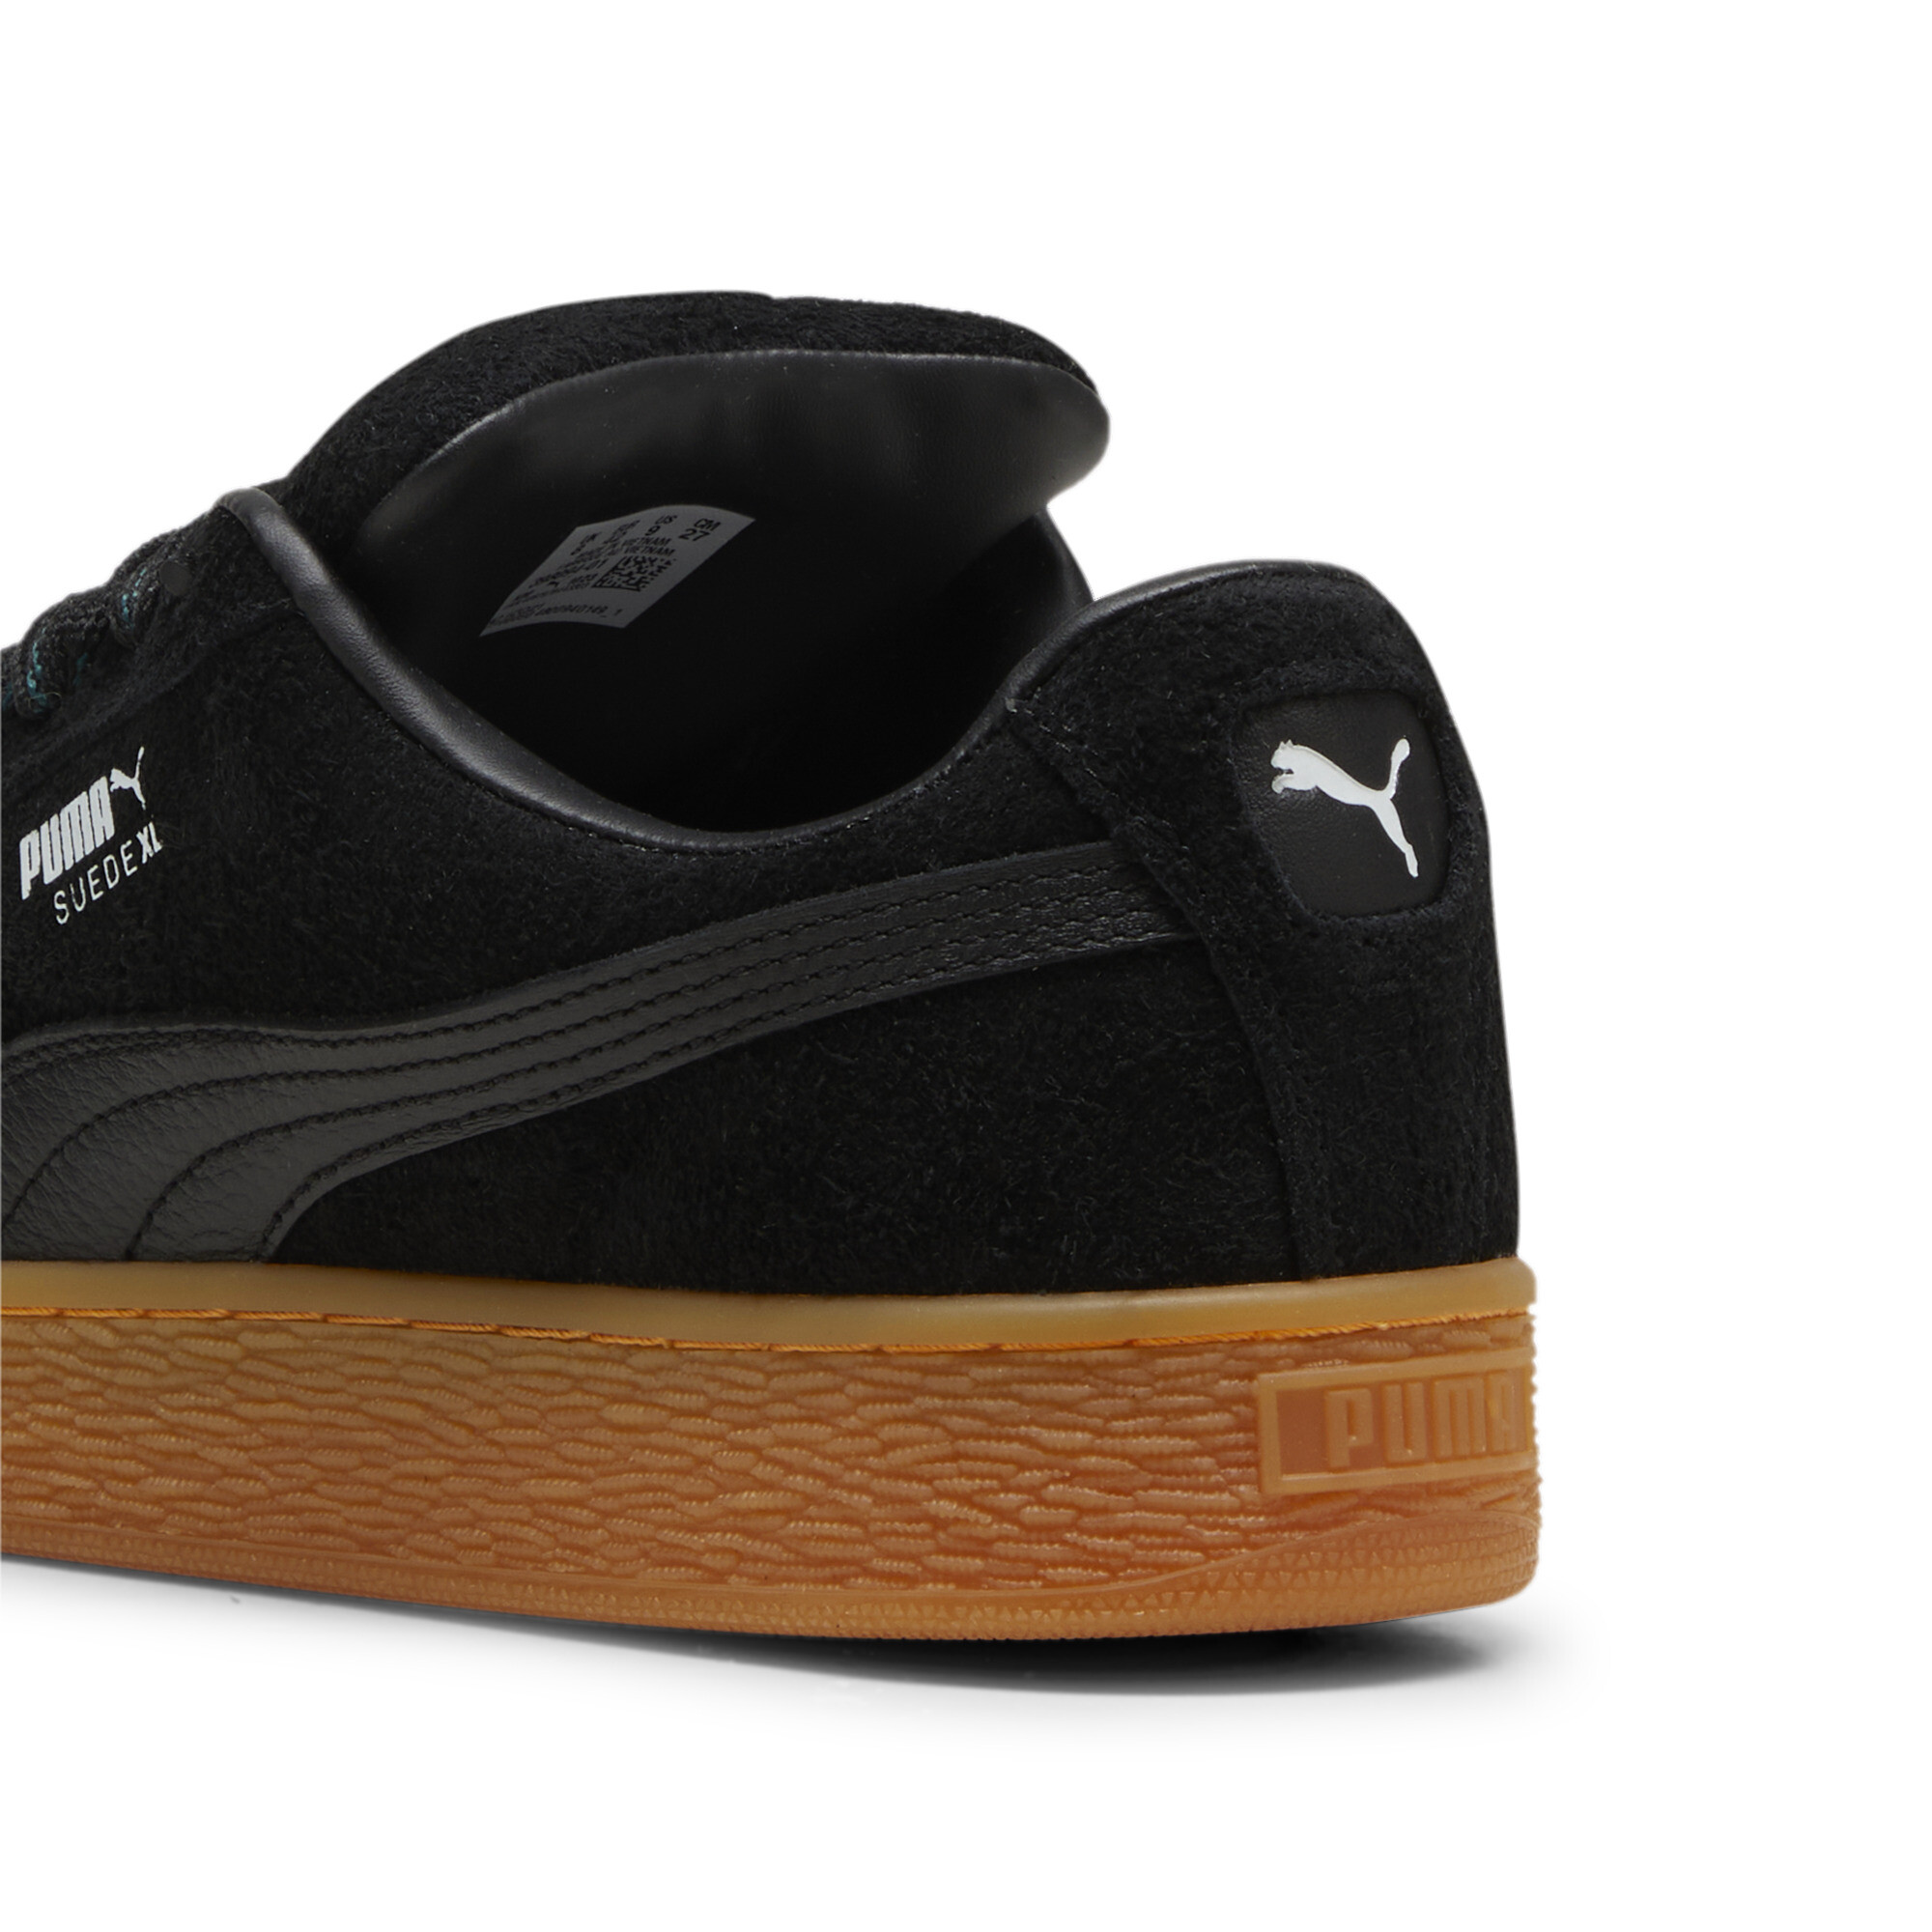 Puma Suede XL Flecked Unisex, Black, Size 39, Shoes